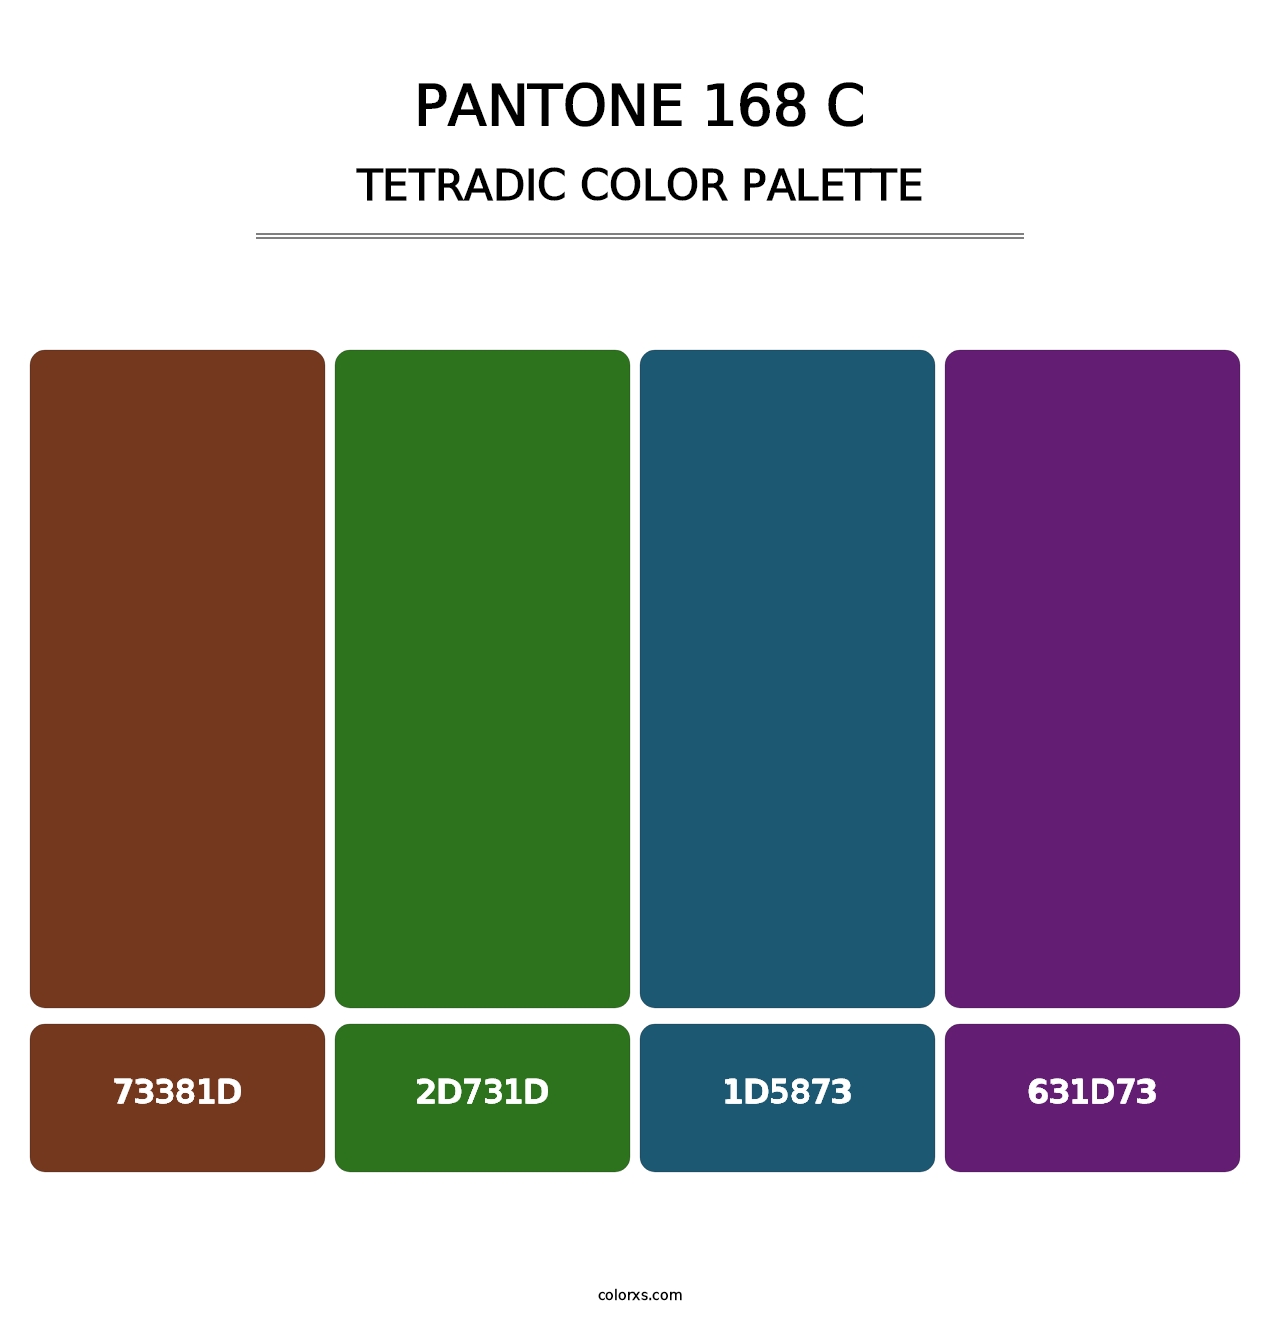 PANTONE 168 C - Tetradic Color Palette